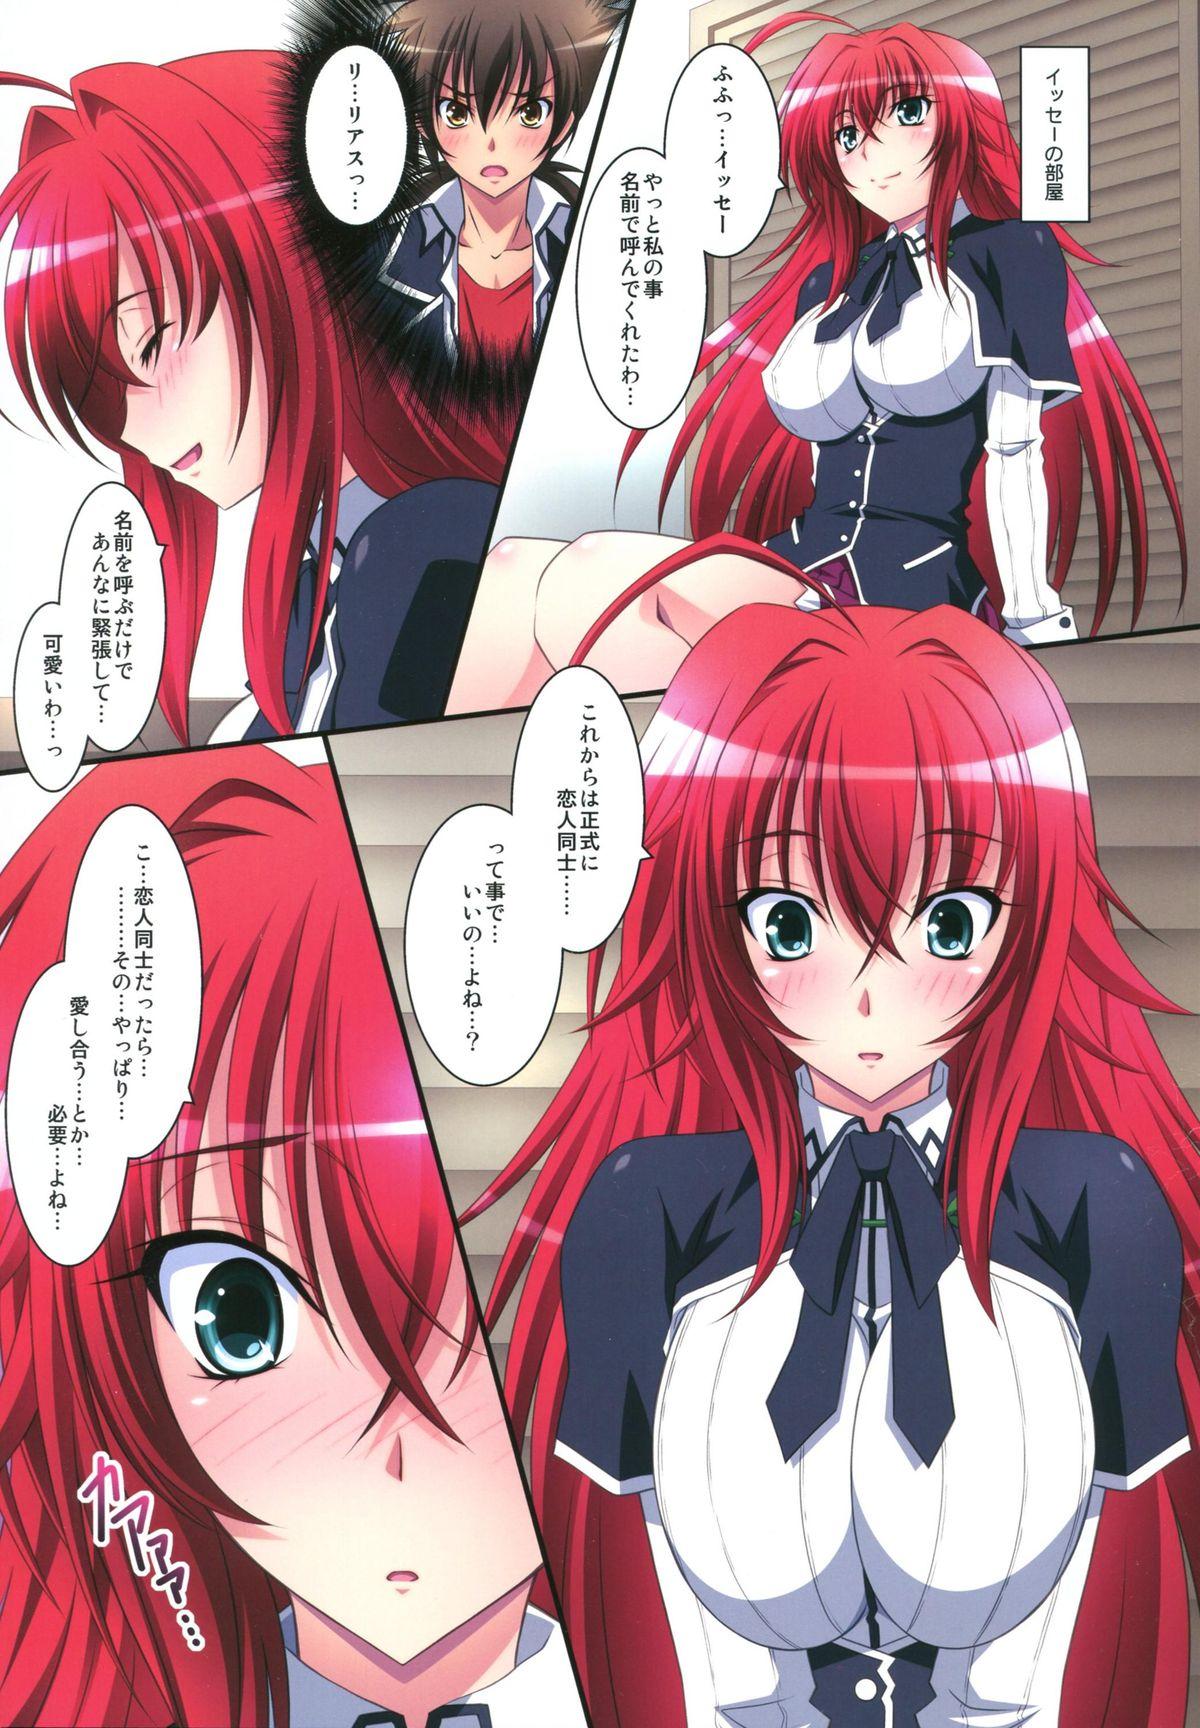 Oralsex Scarlet princess "Rias Daisuki!" - Highschool dxd Affair - Page 4